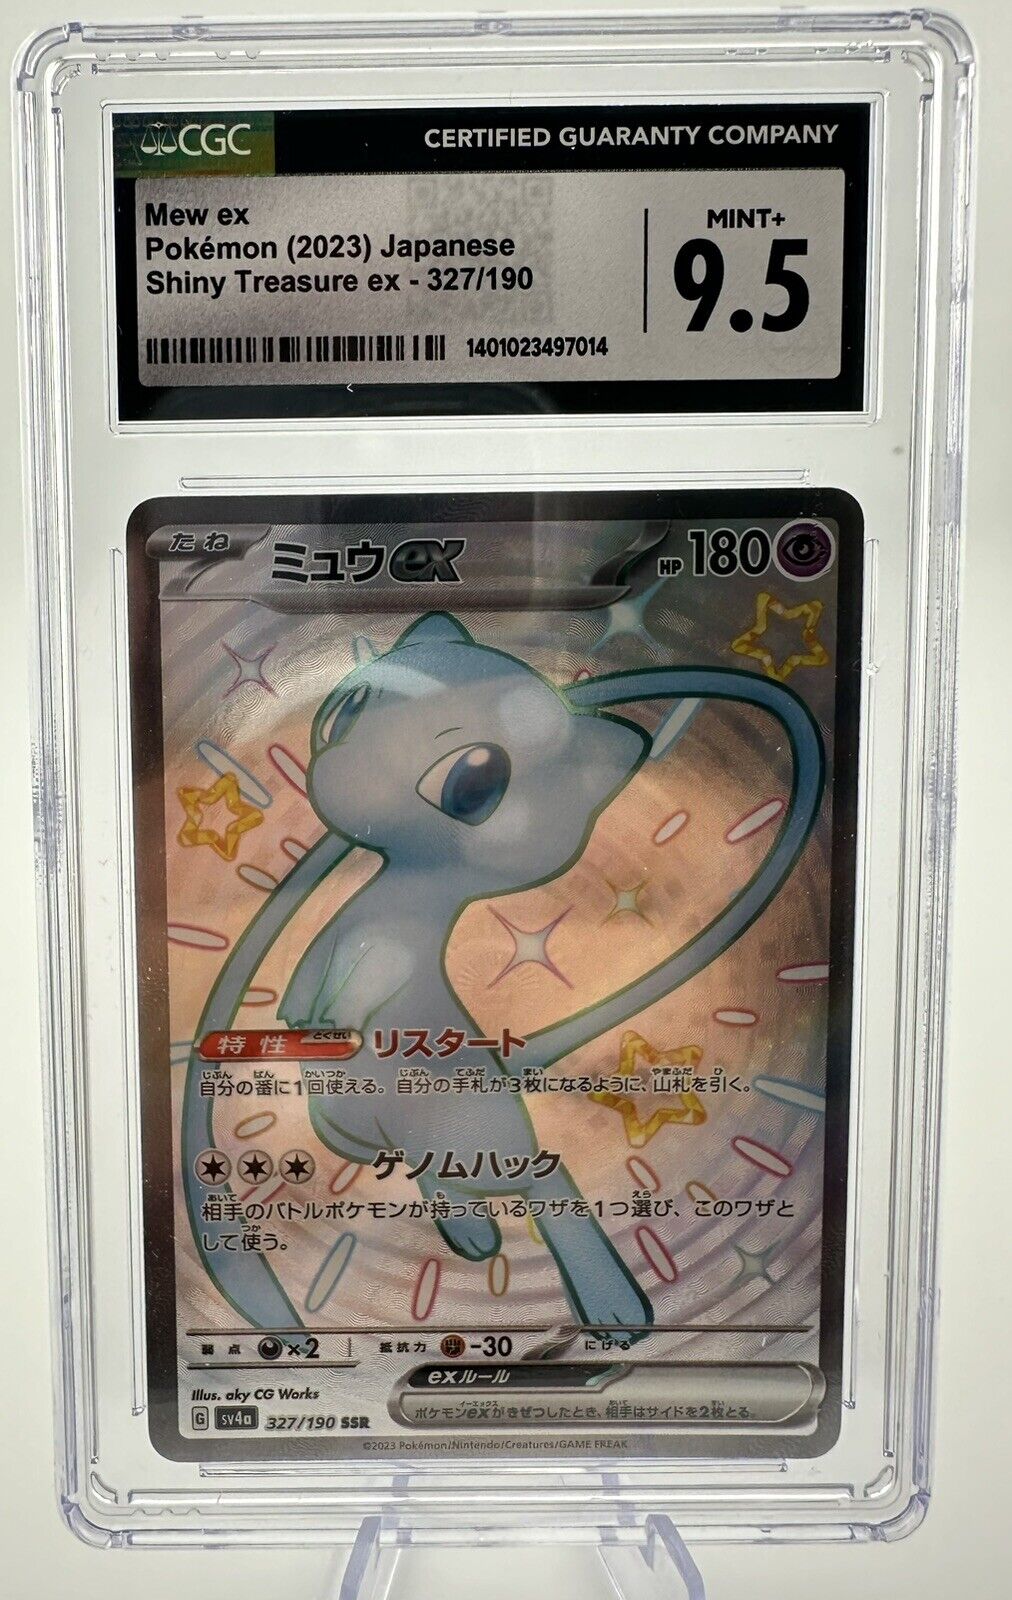 Mew ex Pokemon 2023 Japanese Shiny Treasure ex 327/190 CGC Mint + 9.5